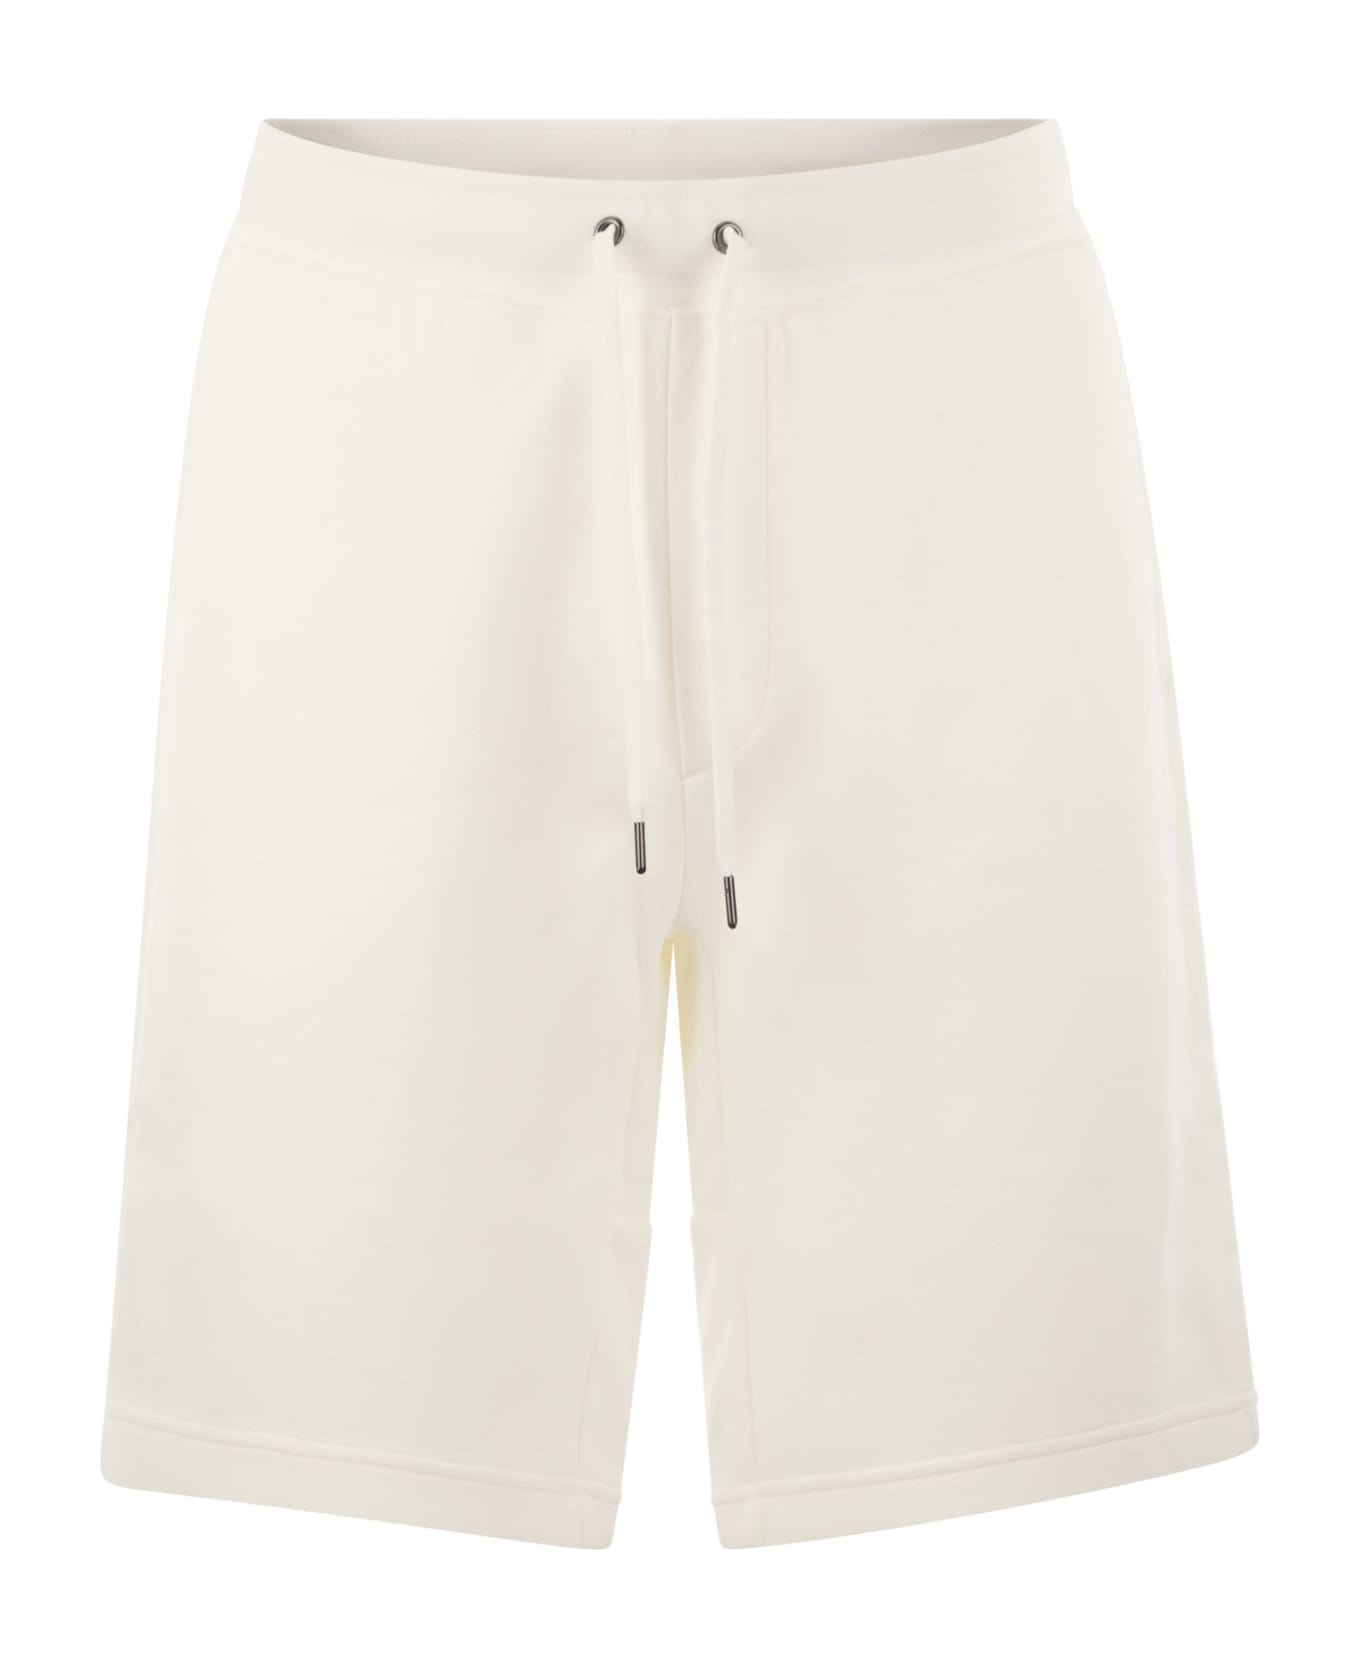 Polo Ralph Lauren Double-knit Shorts - White